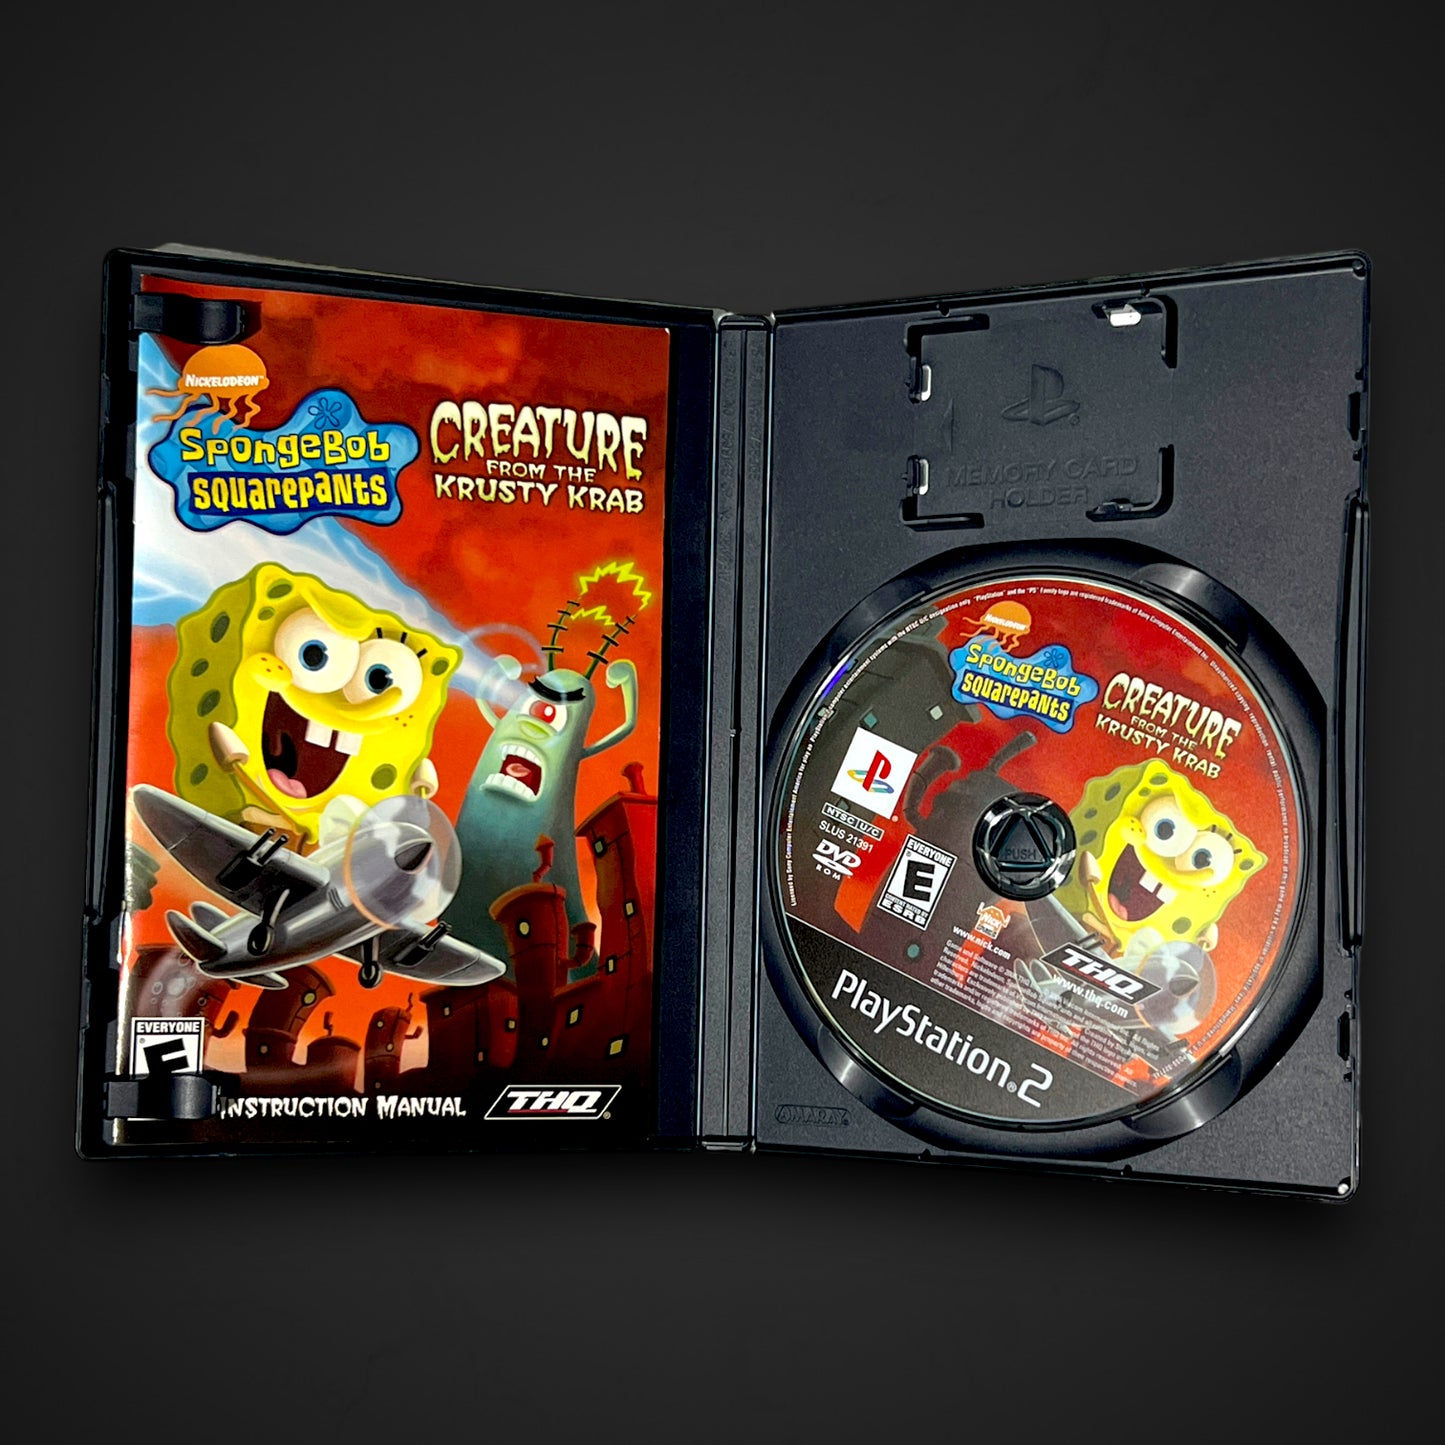 SpongeBob SquarePants: Creature from the Krusty Krab (Sony PlayStation 2, 2006)